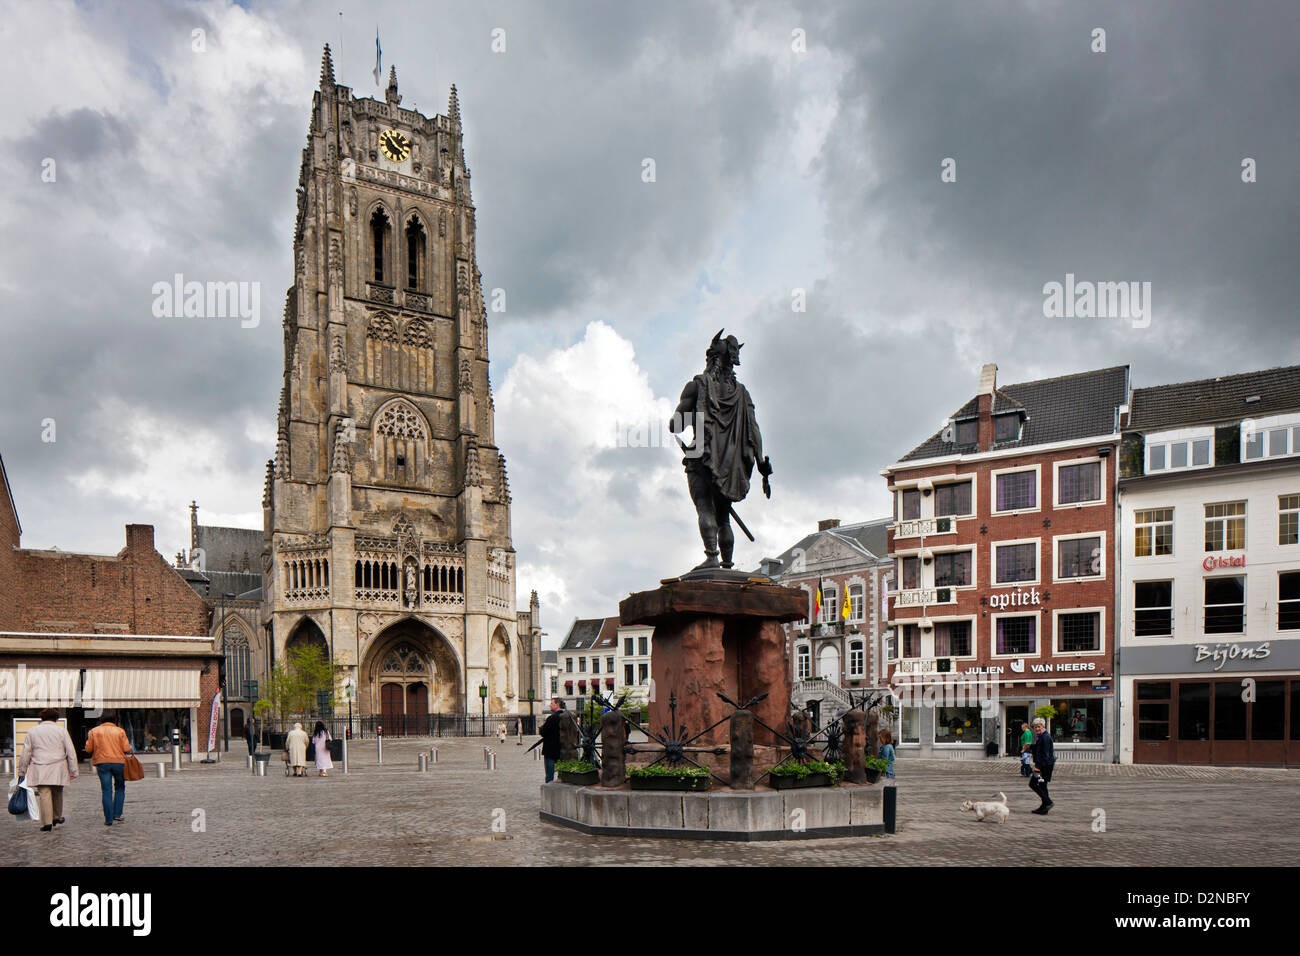 The statue of Ambiorix at the Great Market and the Tongeren Basilica / Onze-Lieve-Vrouwe Basiliek at Tongeren, Belgium Stock Photo